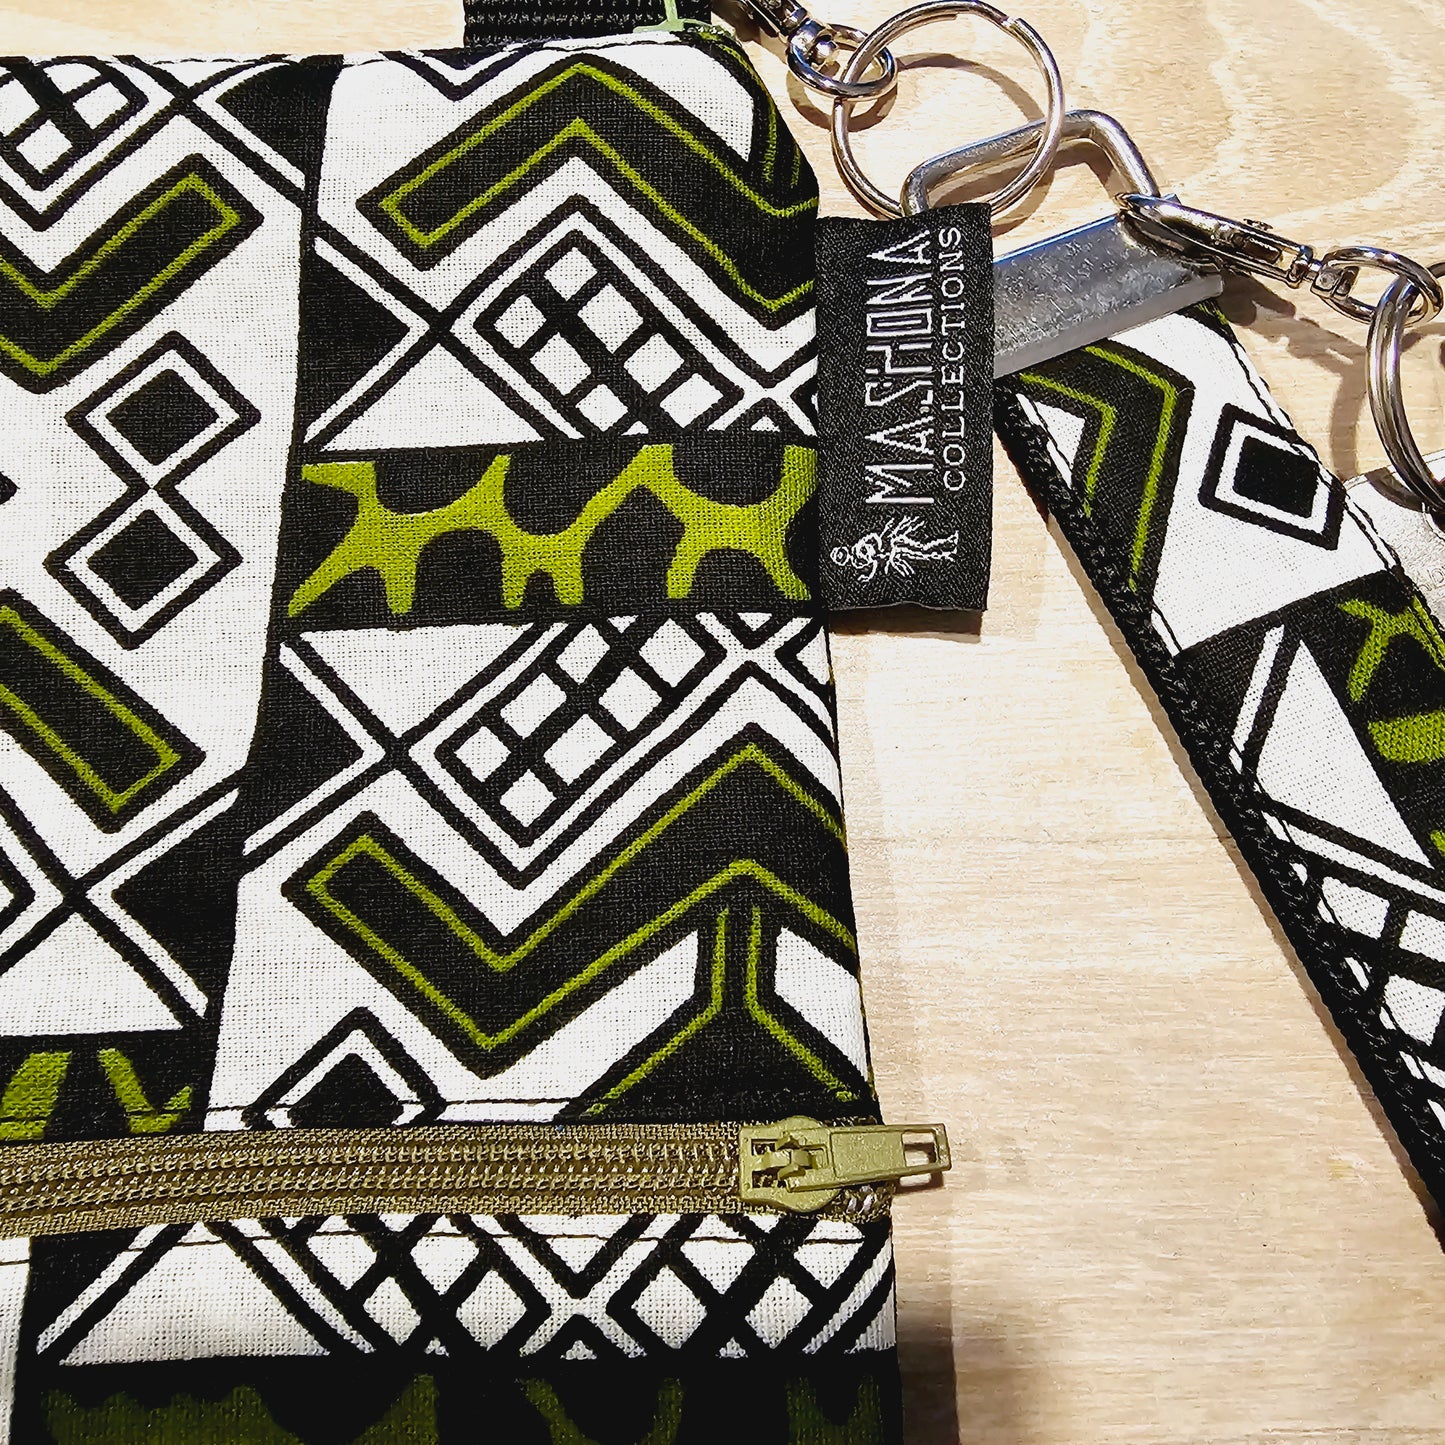 Handmade Phone Bag and Keyfob Set  | African Ankara Print Fabric | Vegan Leather Detail | Adjustable Shoulder Strap